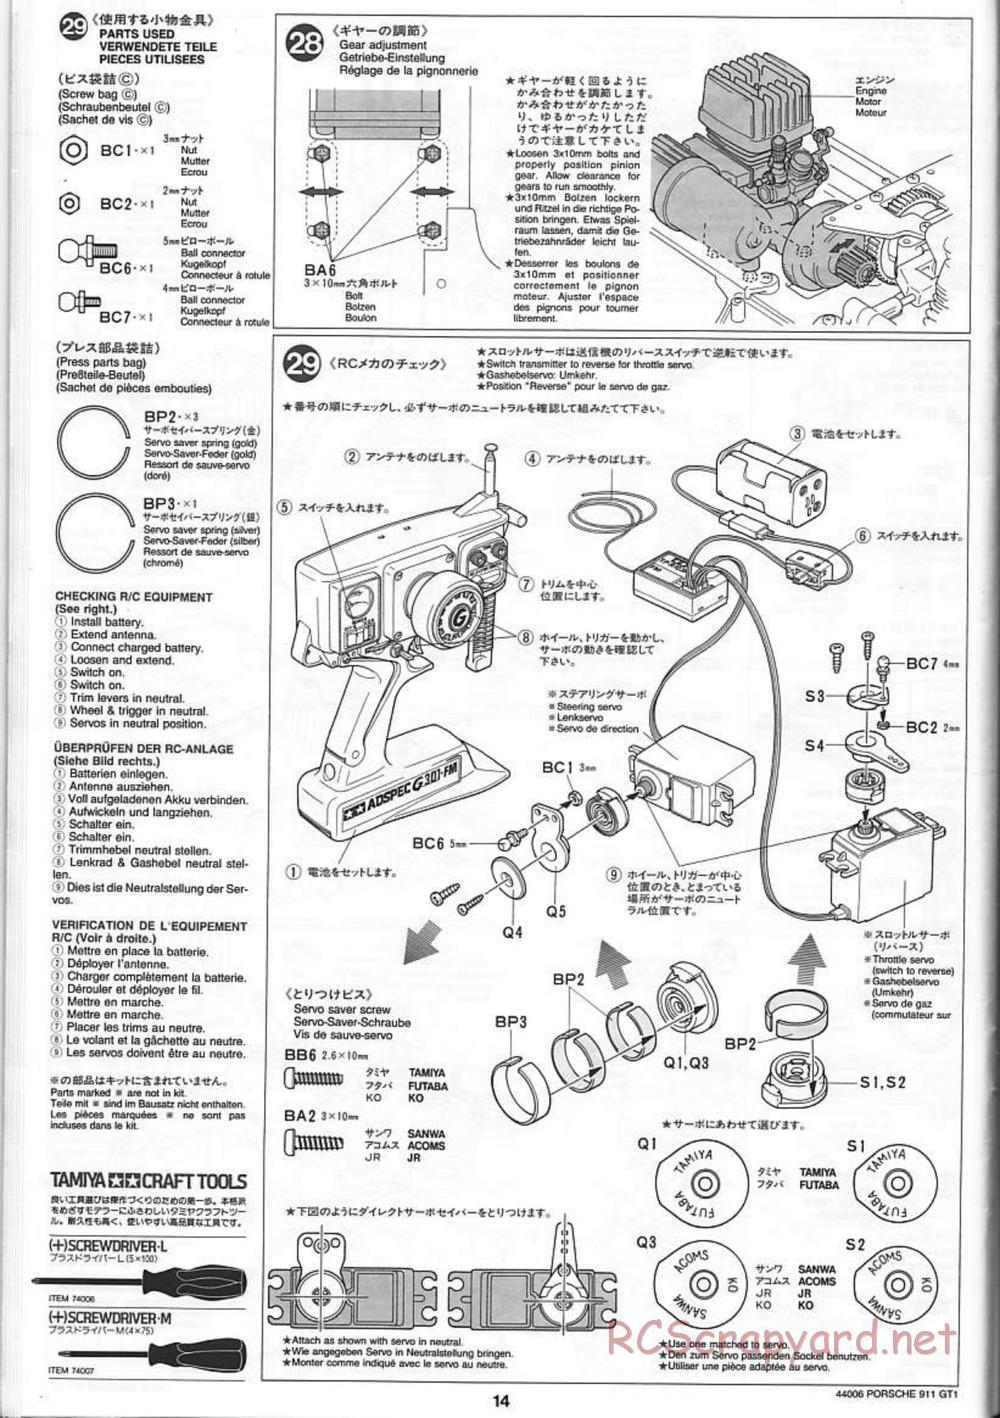 Tamiya - Porsche 911 GT1 - TGX Mk.1 Chassis - Manual - Page 14